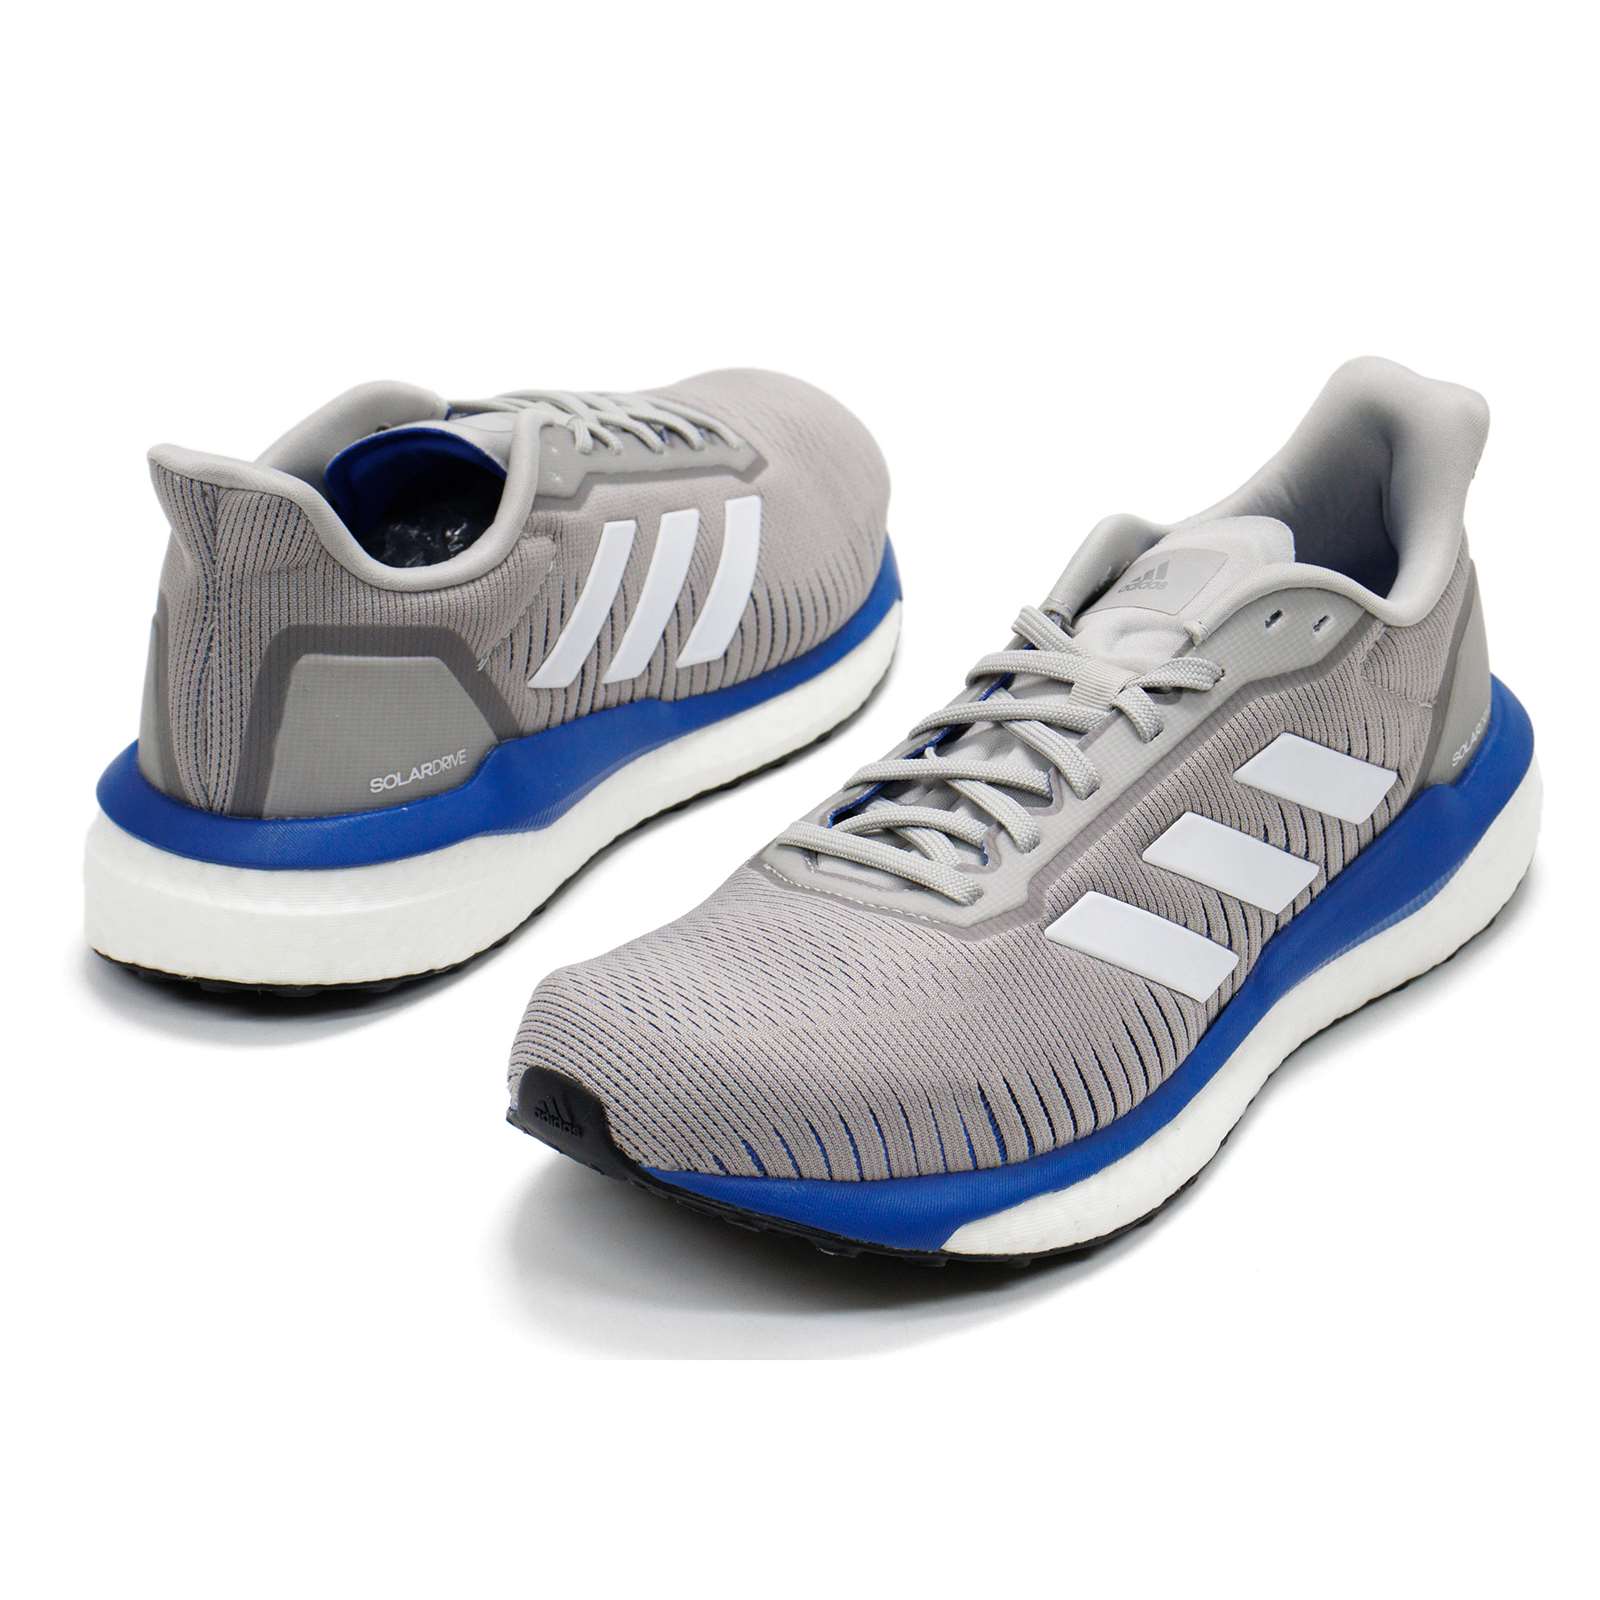 Adidas Men Solar Drive 19 Running Shoes